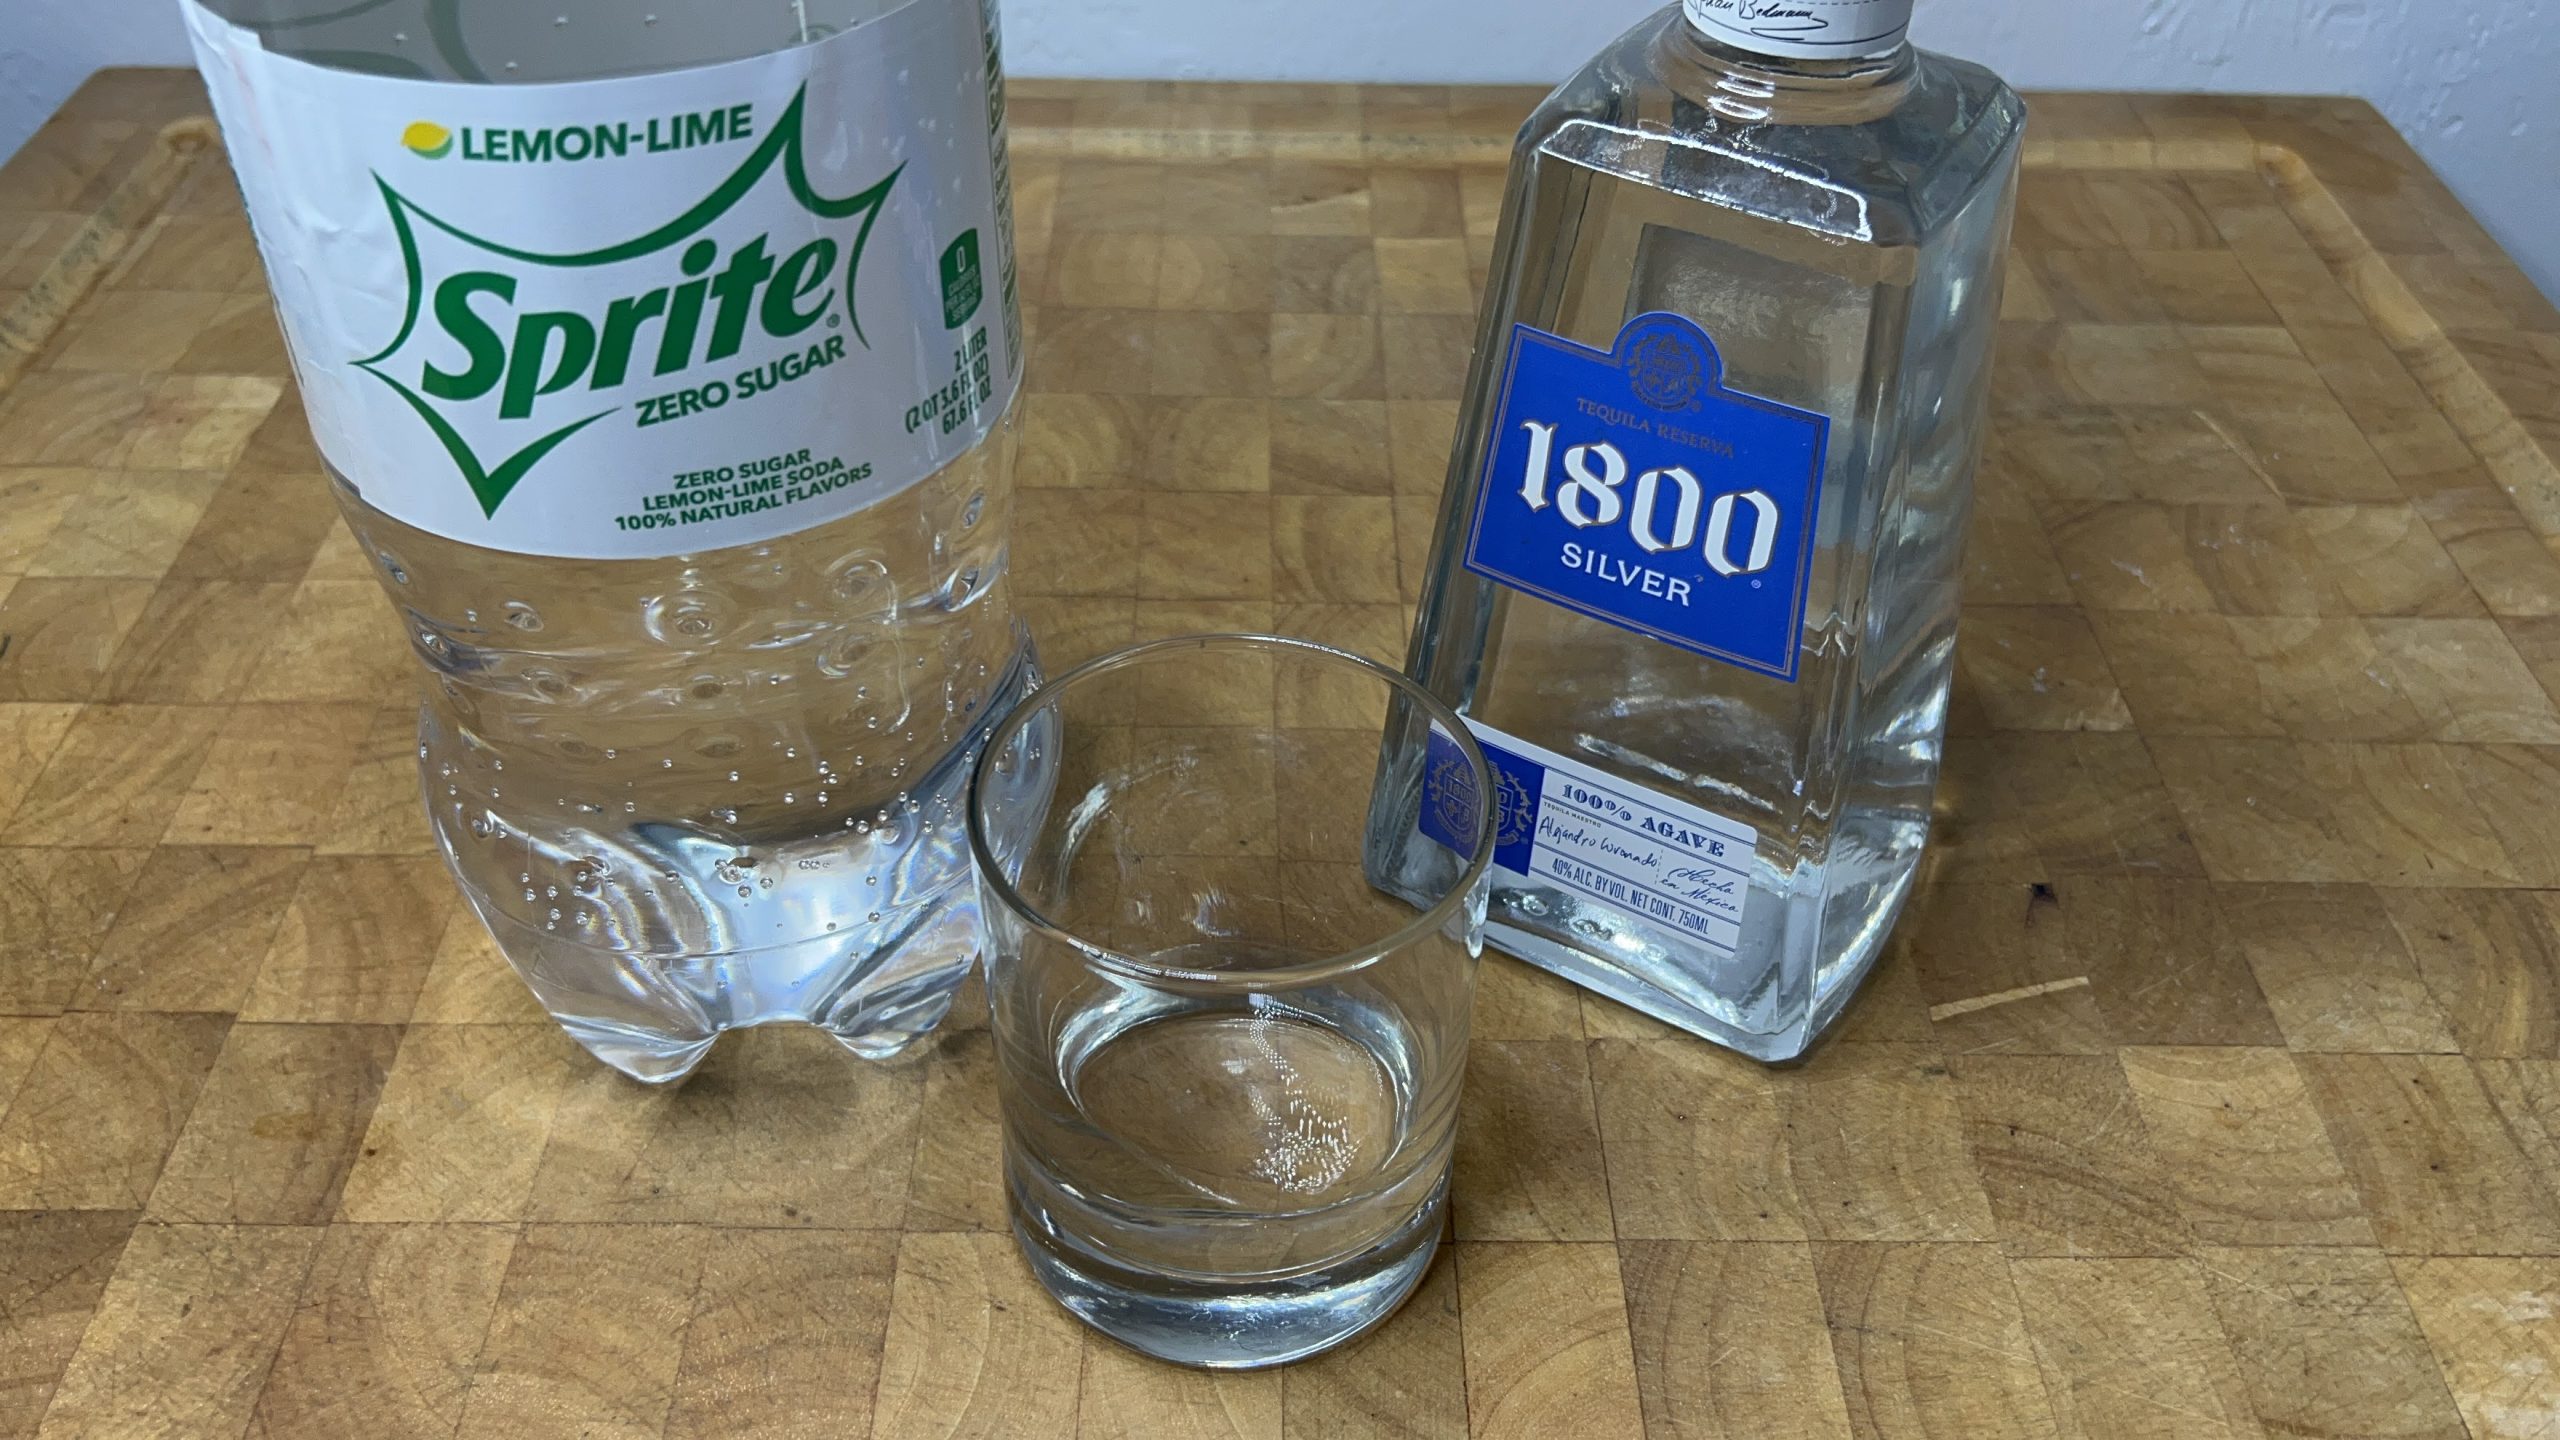 empty rocks glass next to sprite and tequila